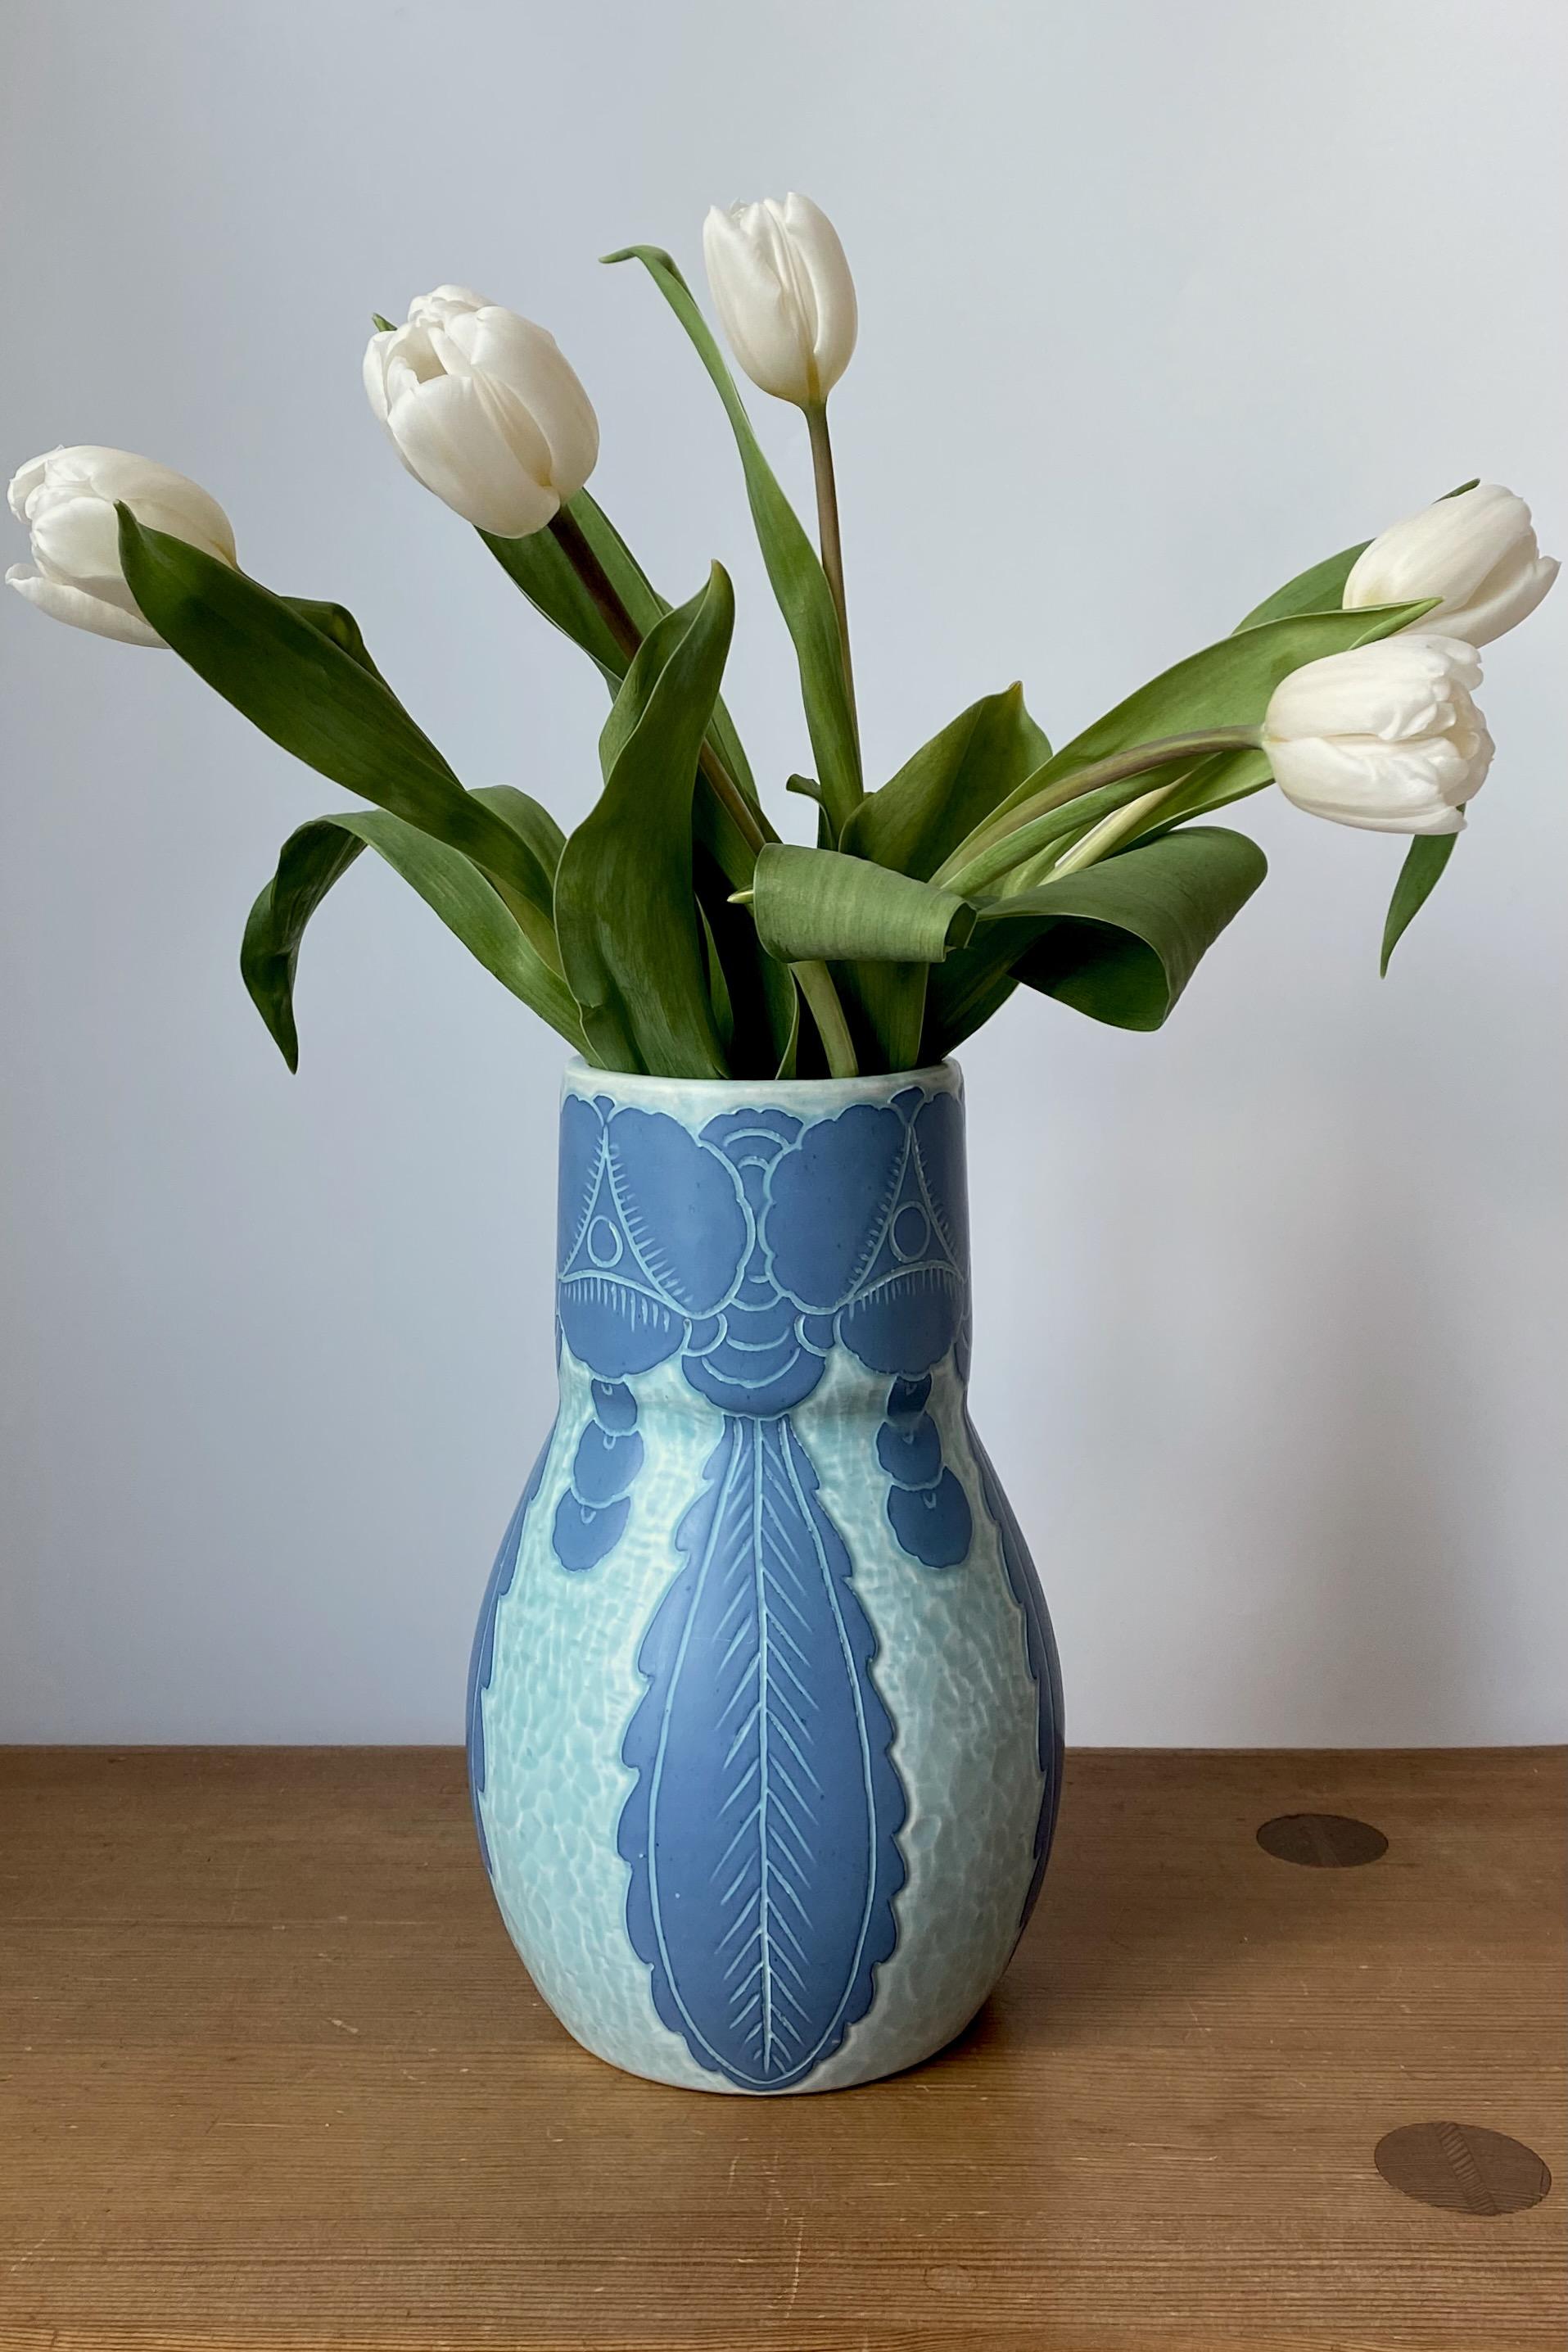 Stunning Sgraffito vase from 1922 by Josef Ekberg for Gustavsberg, Sweden. Flower motif in Swedish Jugend (or Art Nouveau) style decorates the vase in blue shades. Josef Ekberg was a Swedish ceramic artist that worked at Gustavsberg between